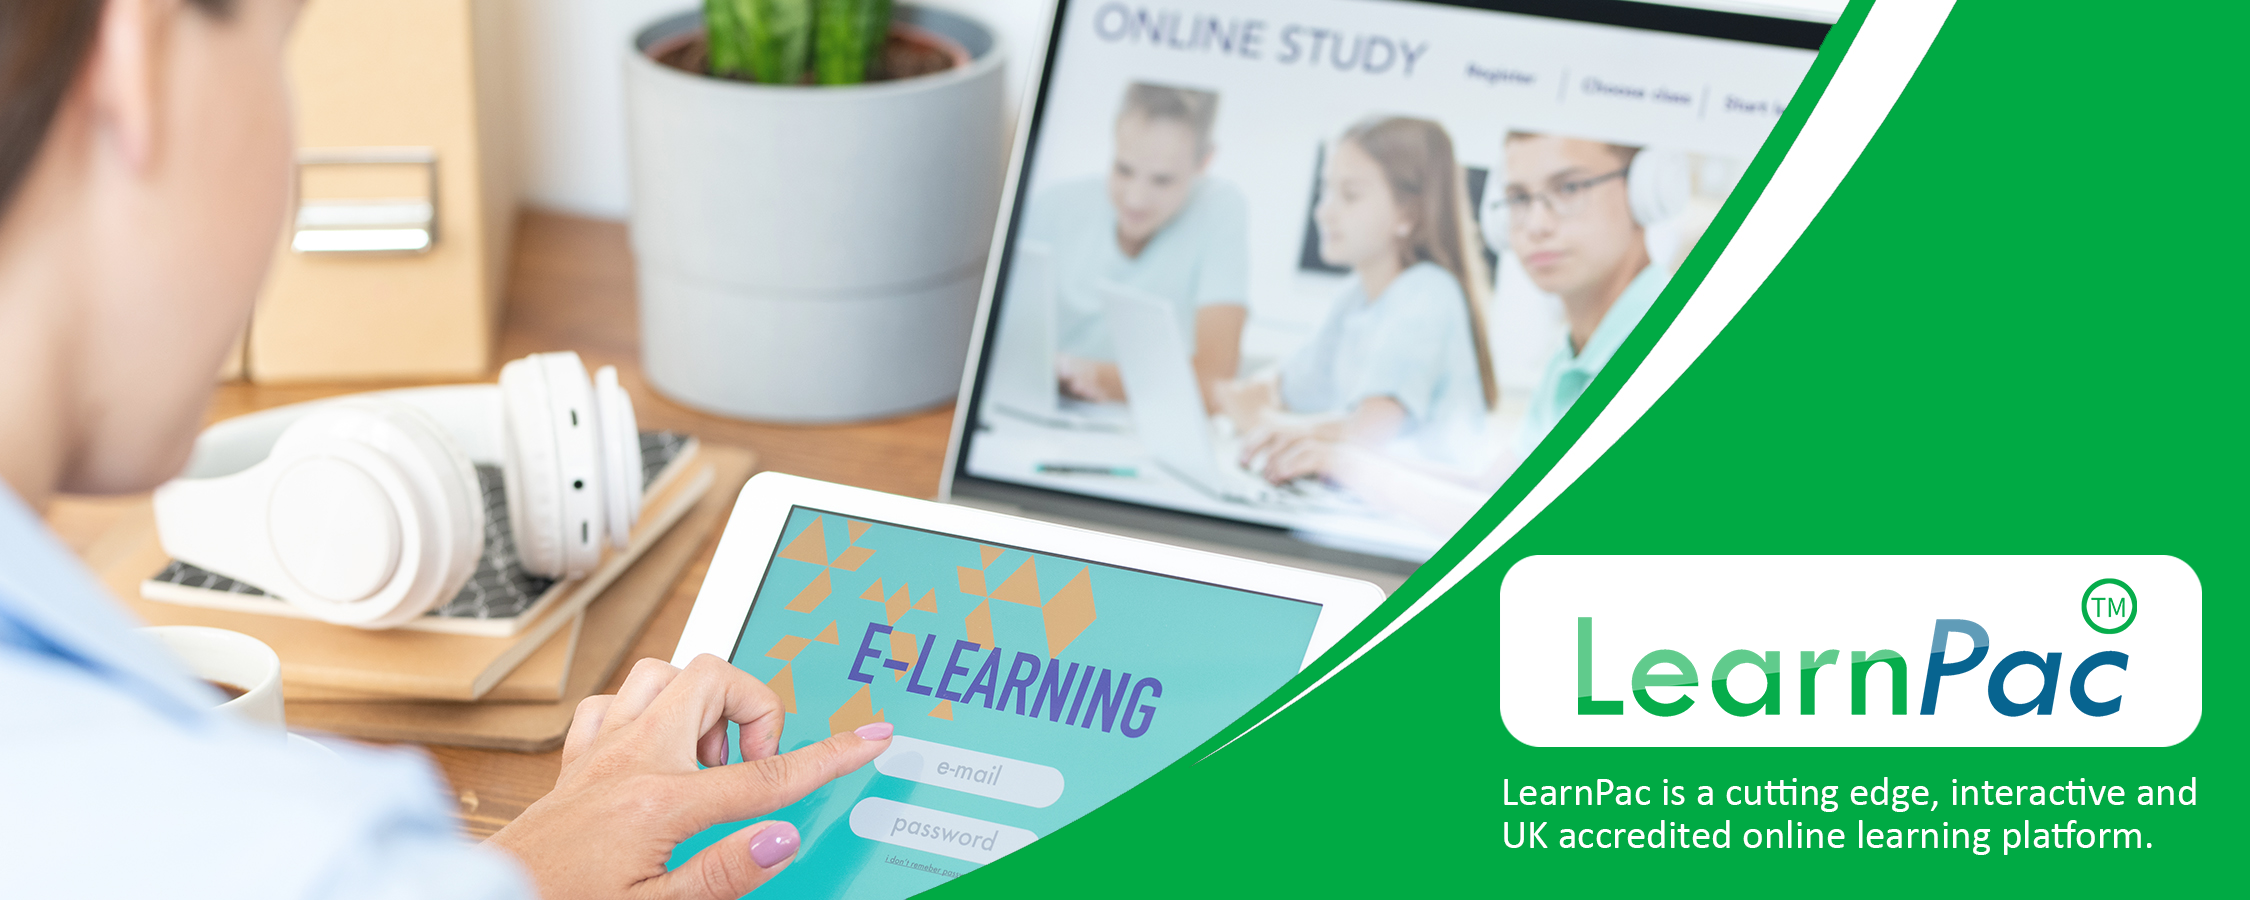 Business and Organisational Ethics UK - Online Learning Courses - E-Learning Courses - LearnPac Systems UK -